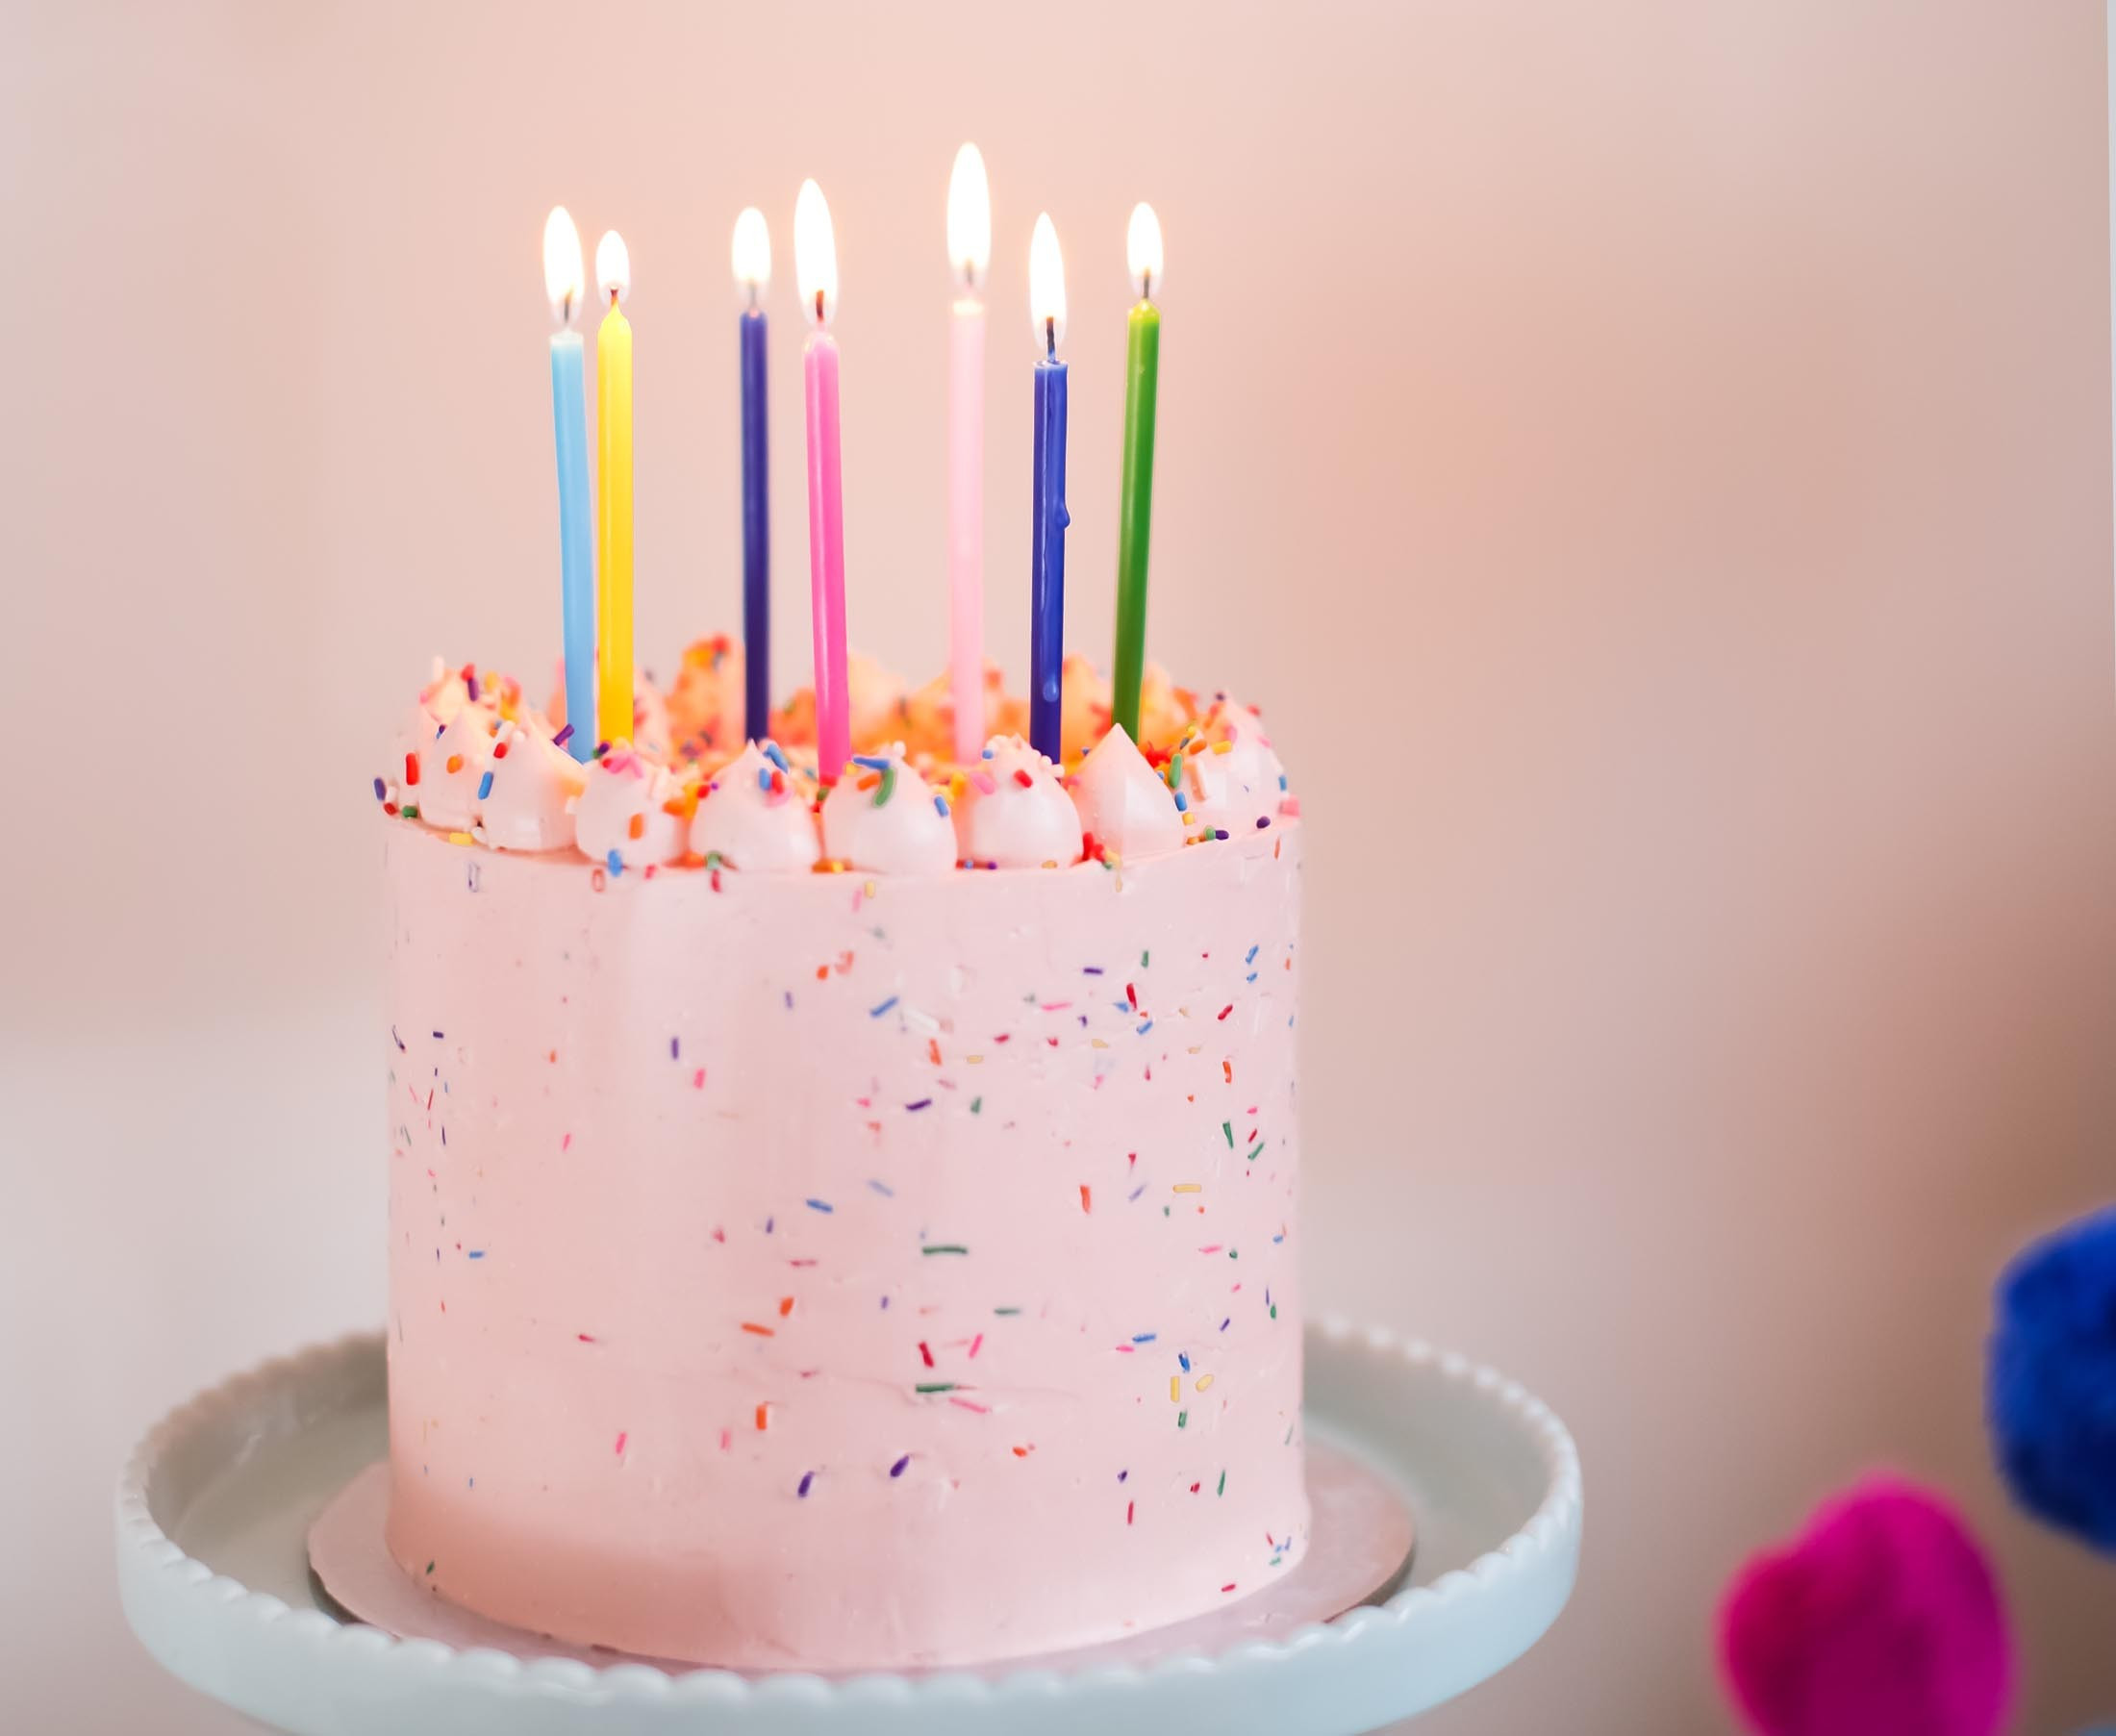 Picture Of Birthday Cakes
 Sprinkle birthday cake